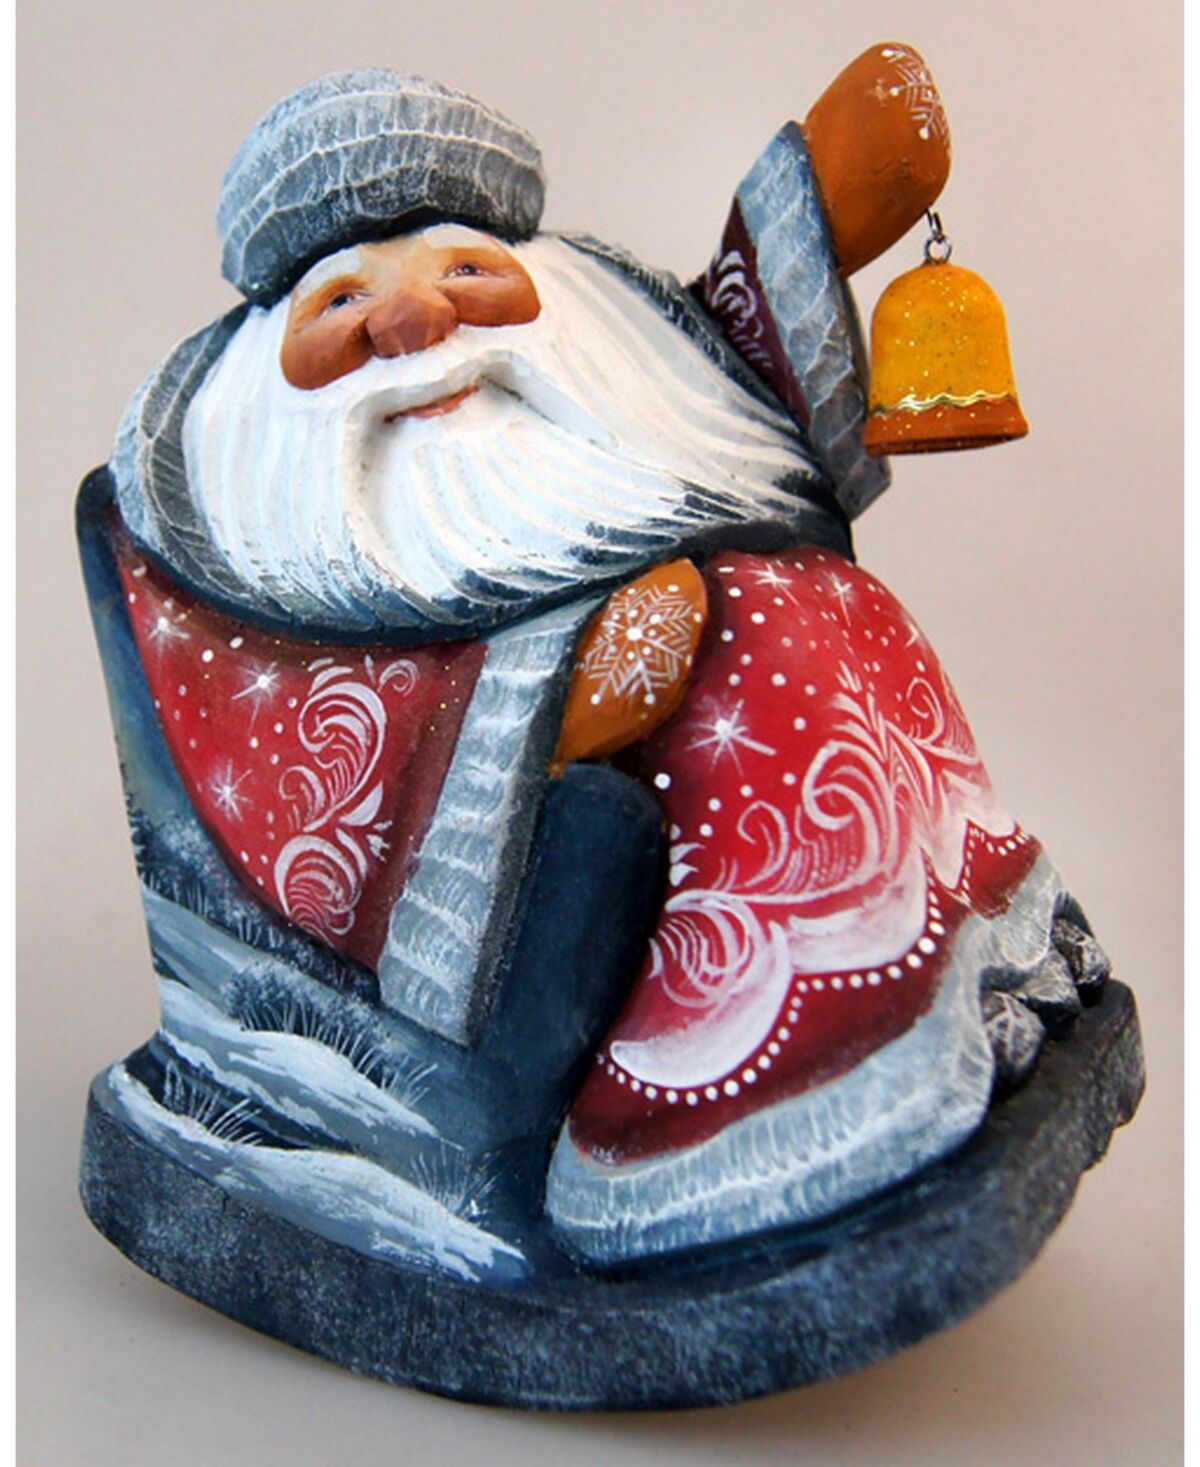 G.DeBrekht Woodcarved and Hand Painted Santa Masterpiece Old World Seasons Greetings Figurine - Multi